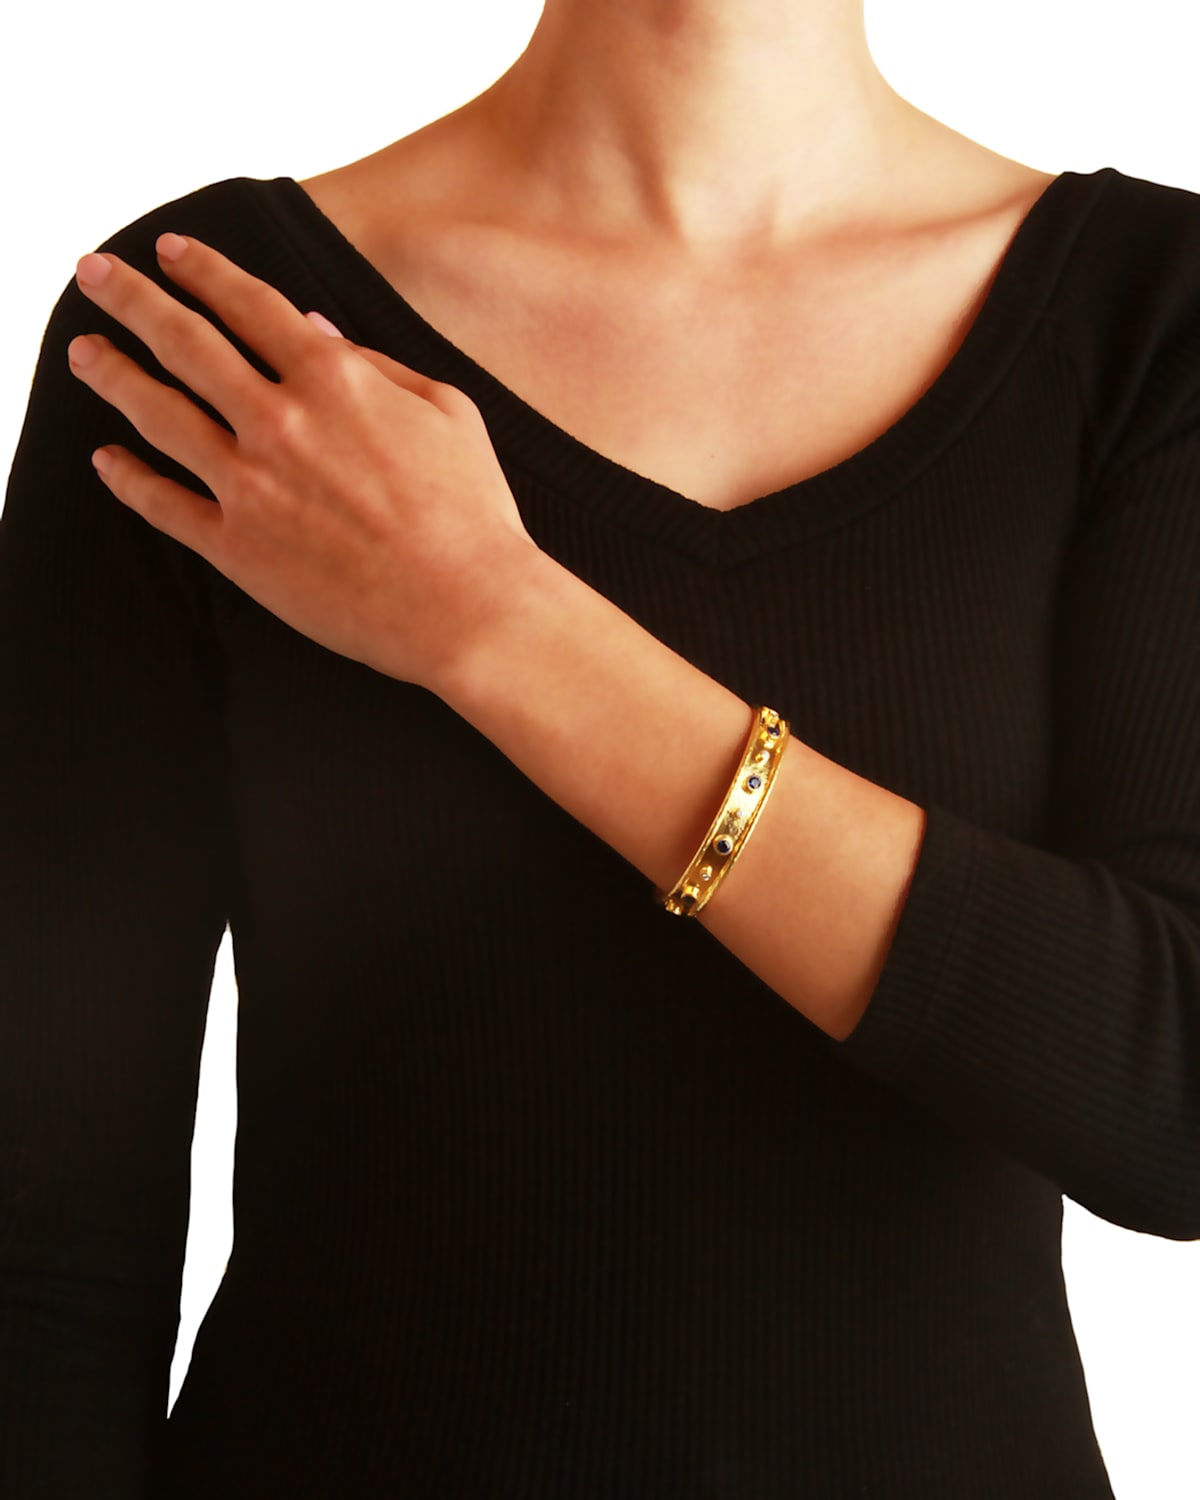 Elizabeth Locke 19k Gold And Sapphire Bracelet